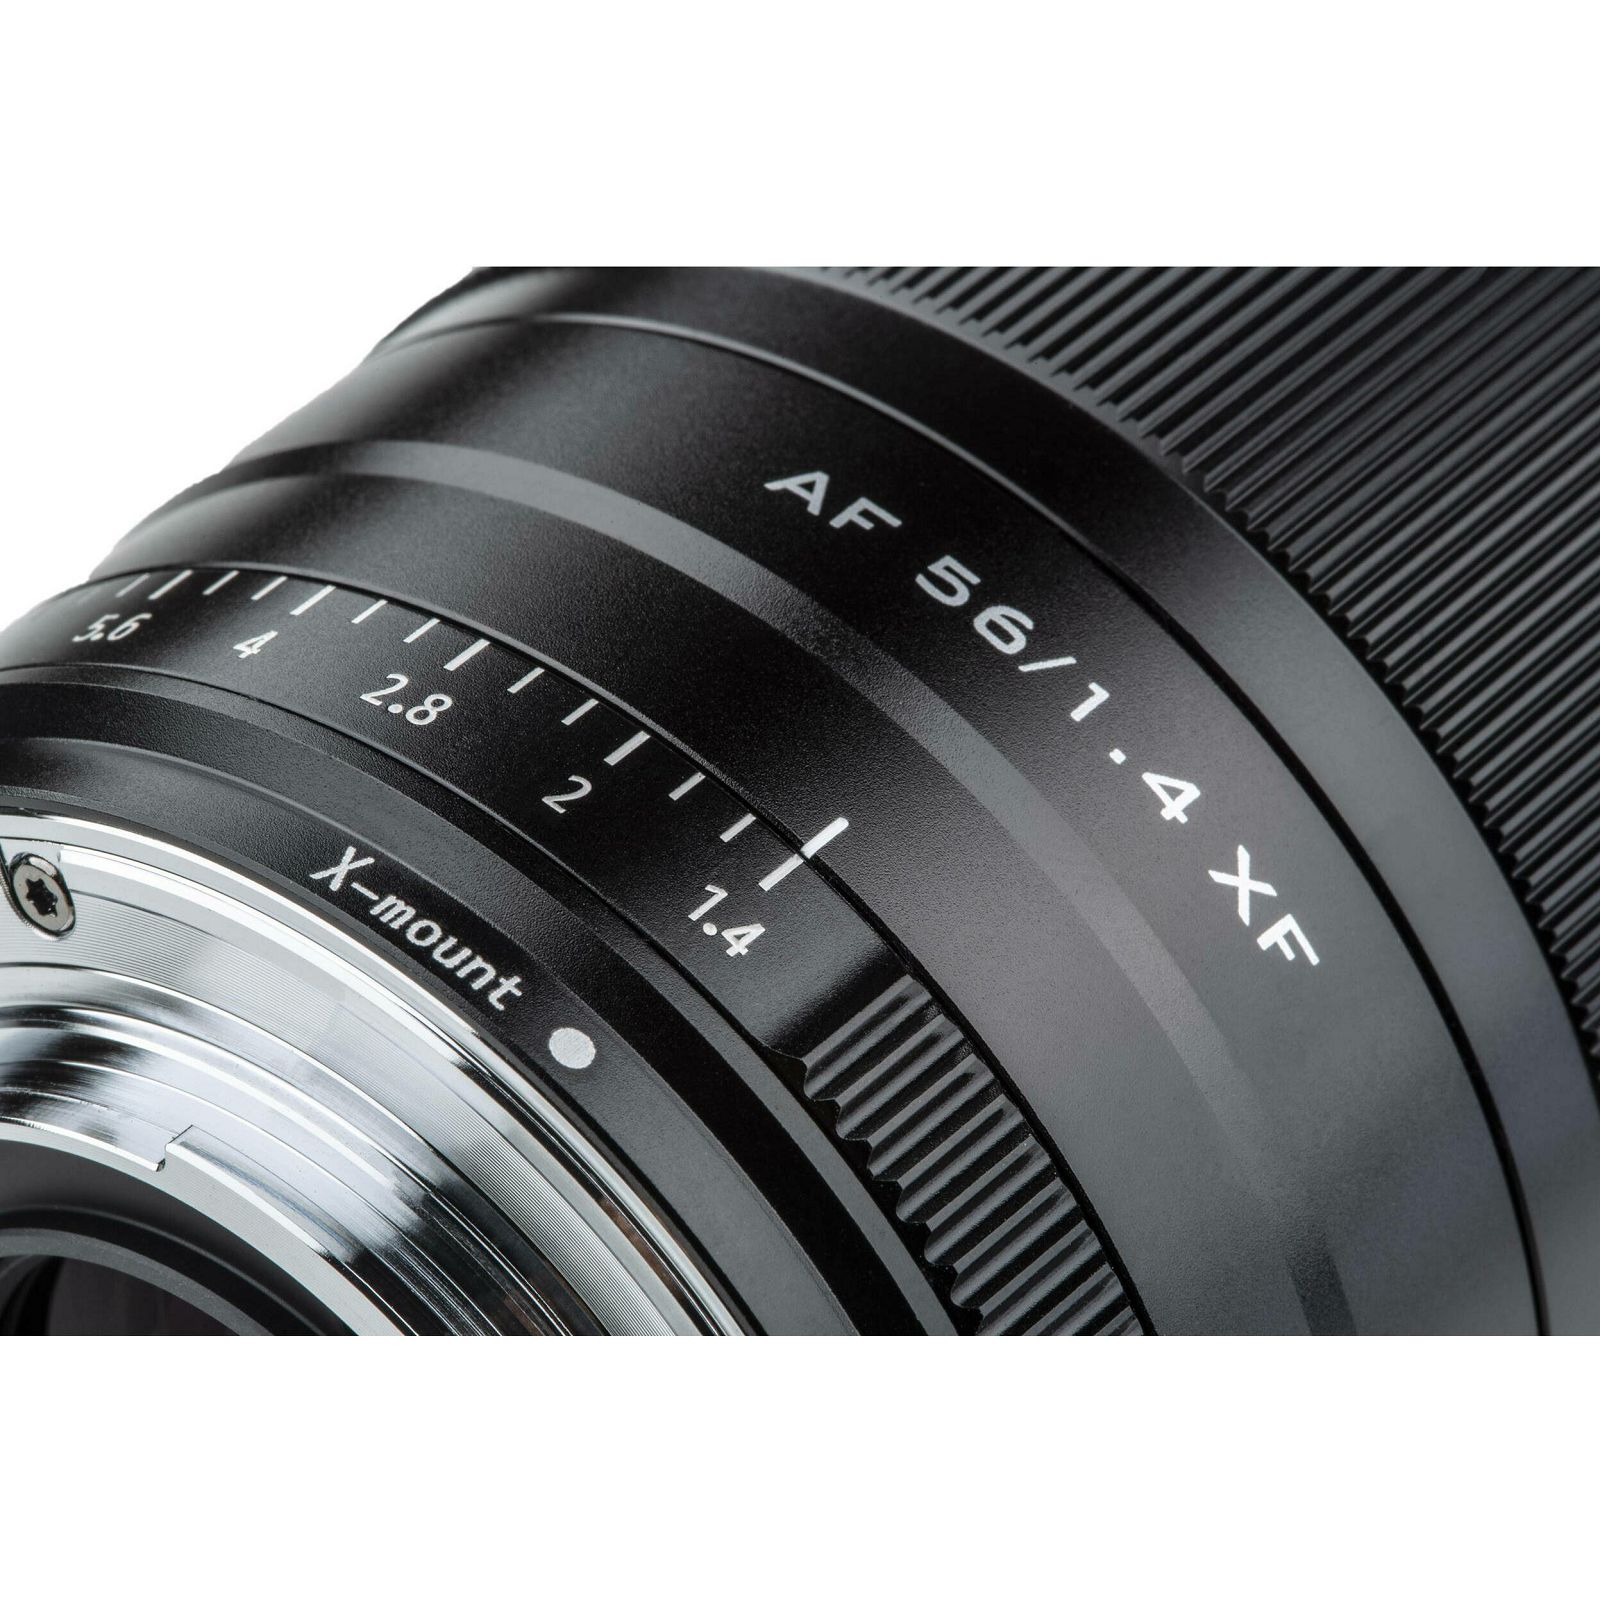 Viltrox AF 56mm f/1.4 XF Black objektiv za Fujifilm X-mount (AF 56/1.4 XF B)